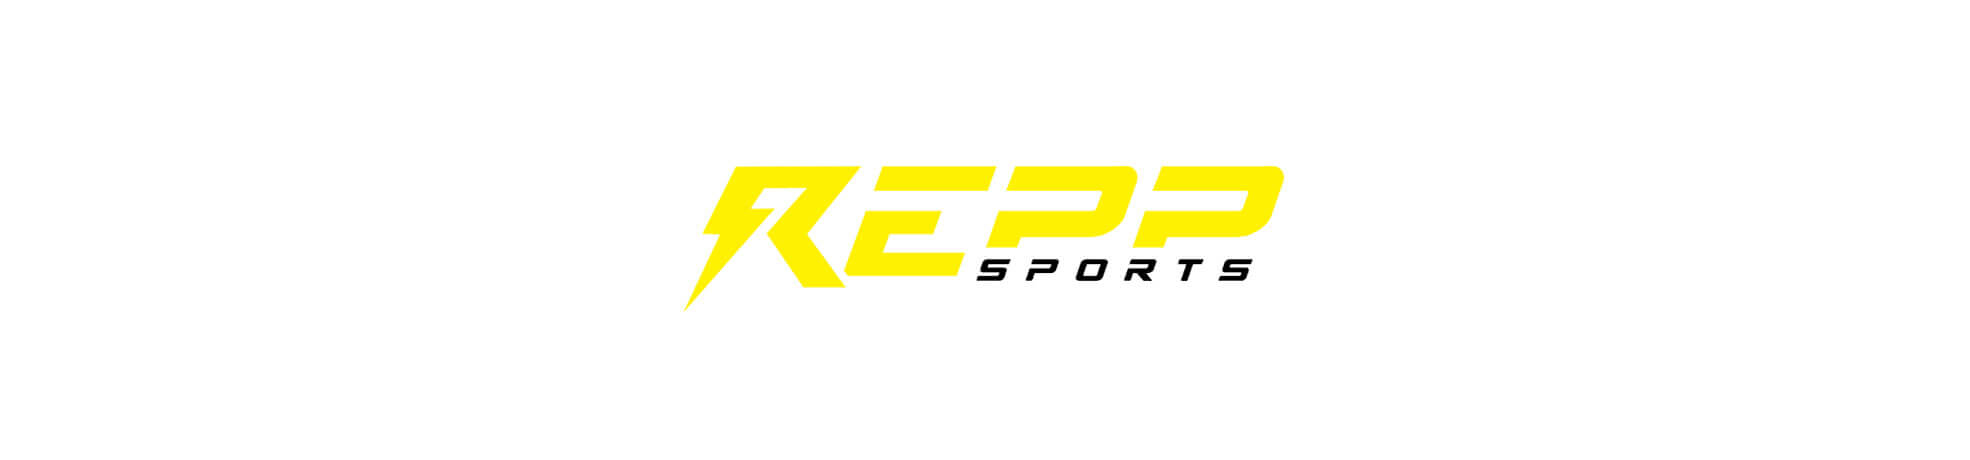 REPP Sports Supplements